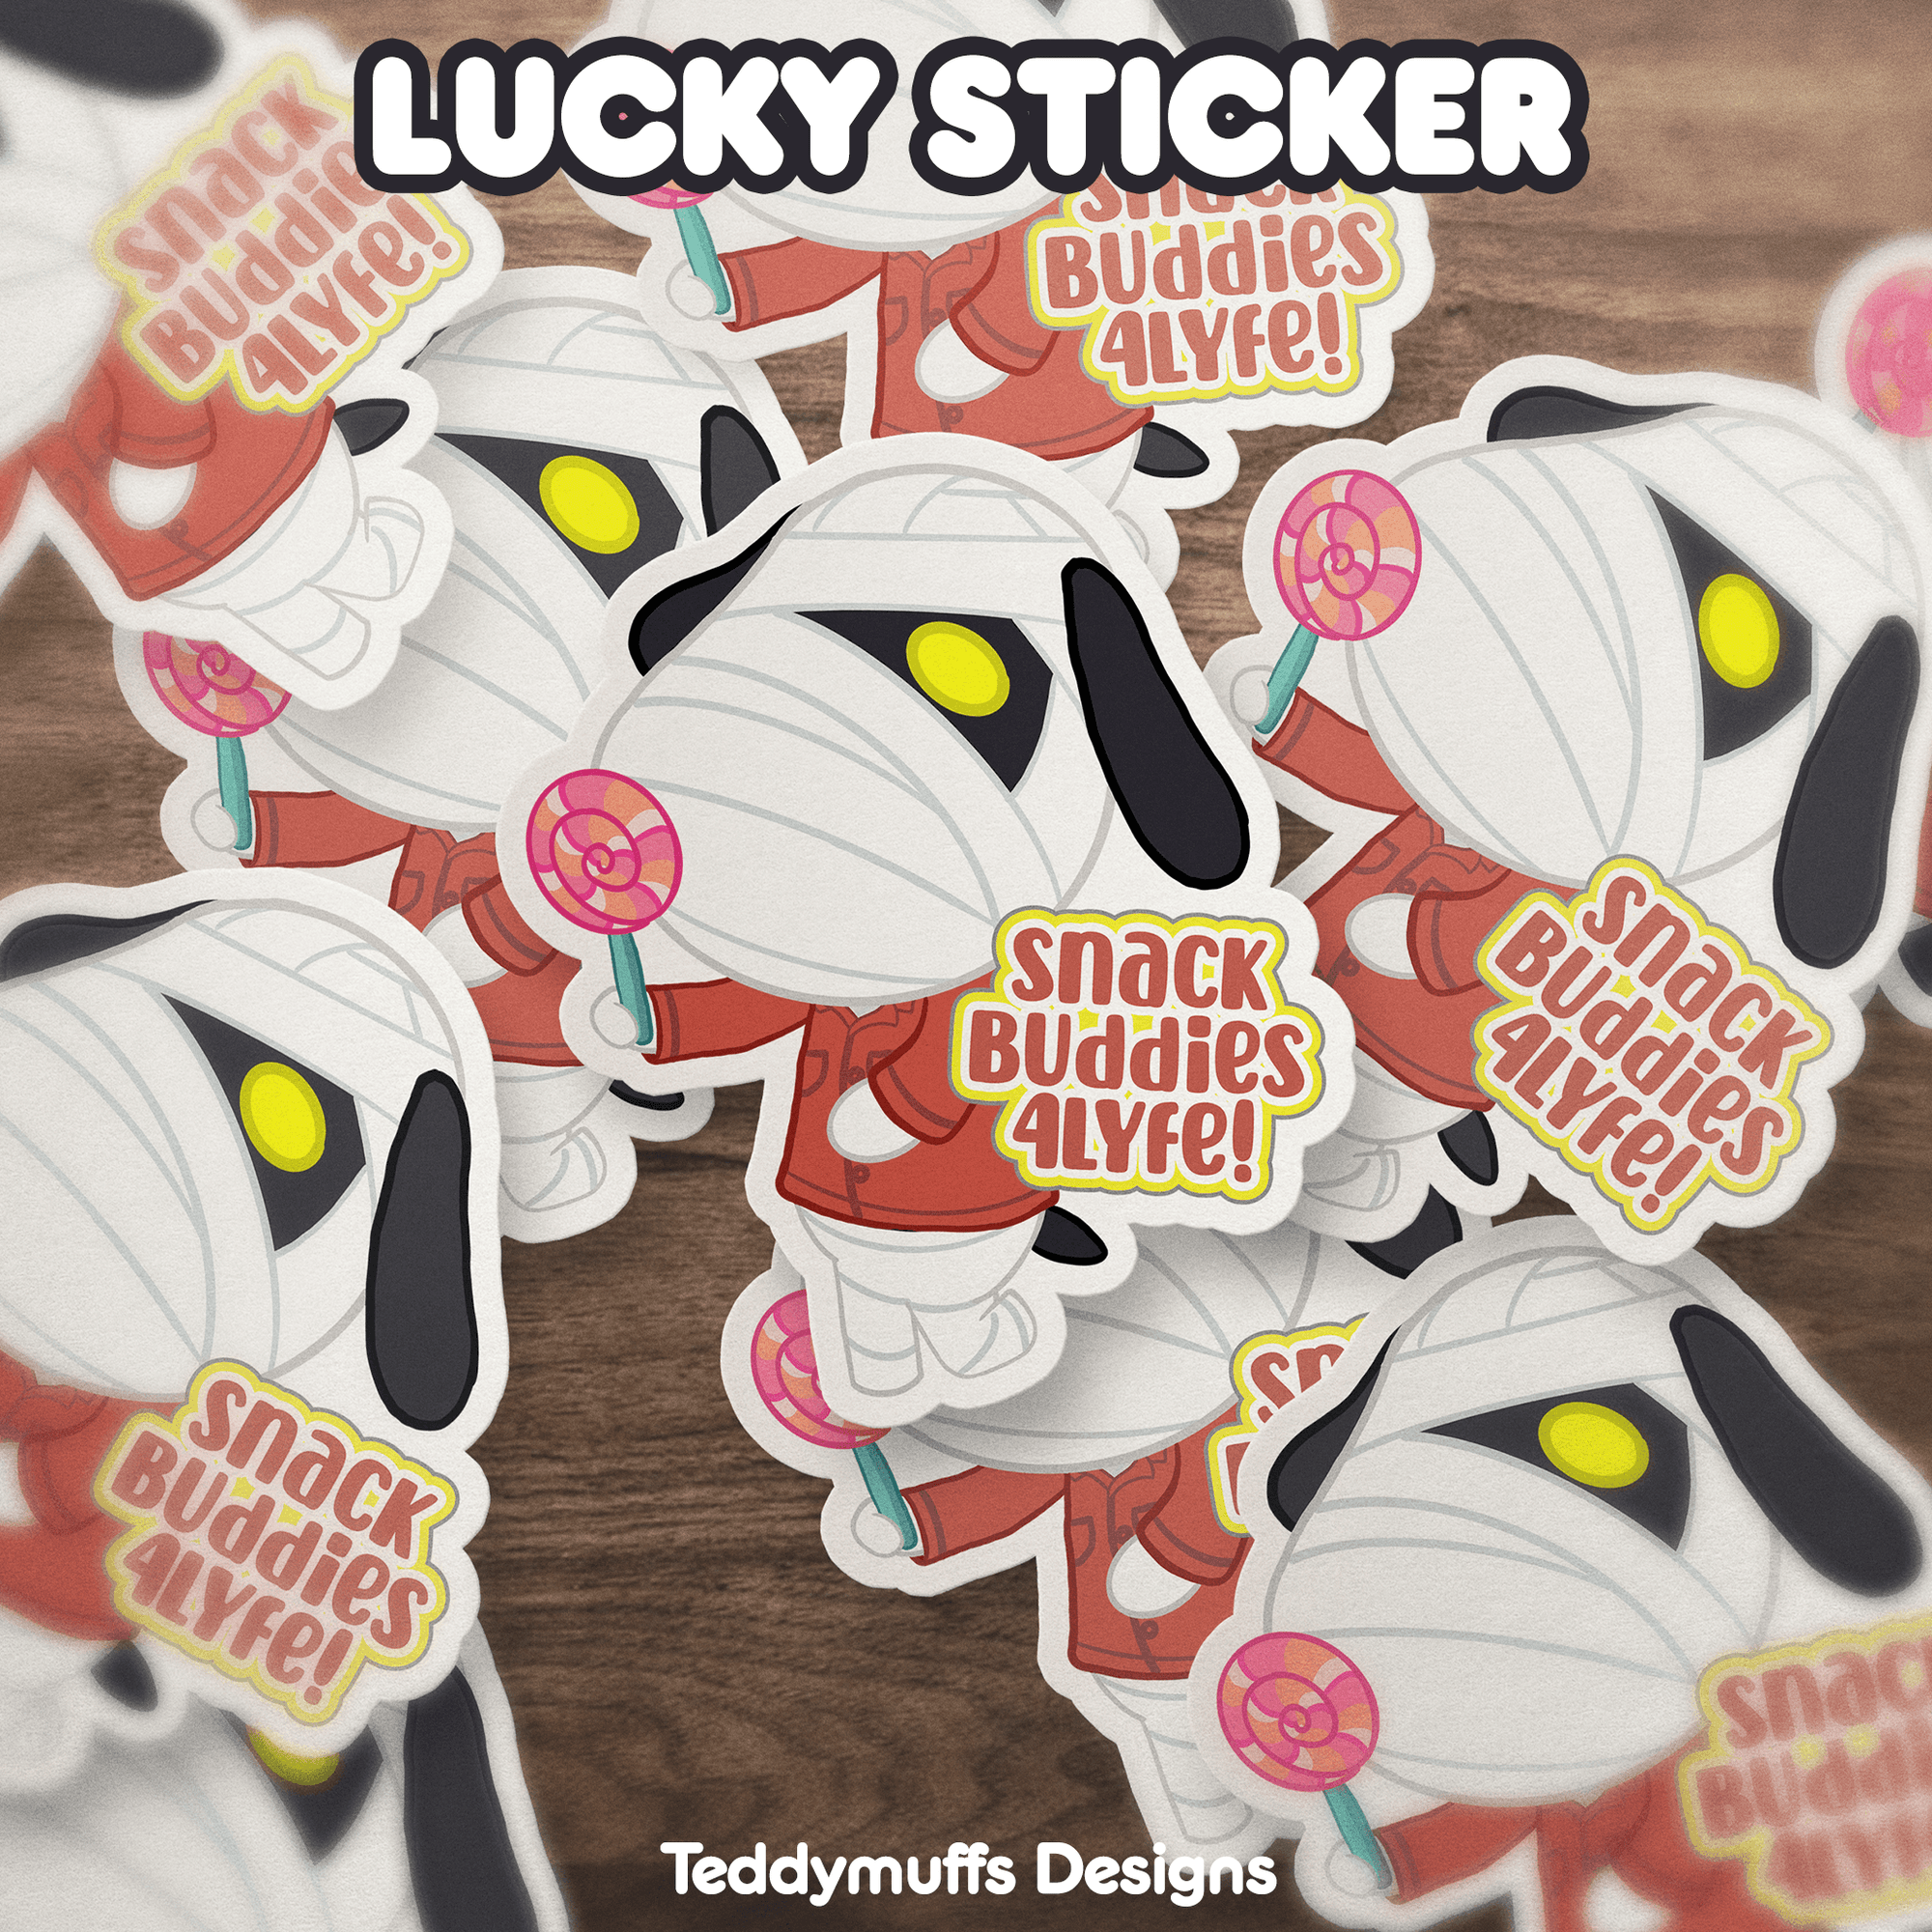 Lucky "Snack Buddy" Sticker - Teddymuffs Designs